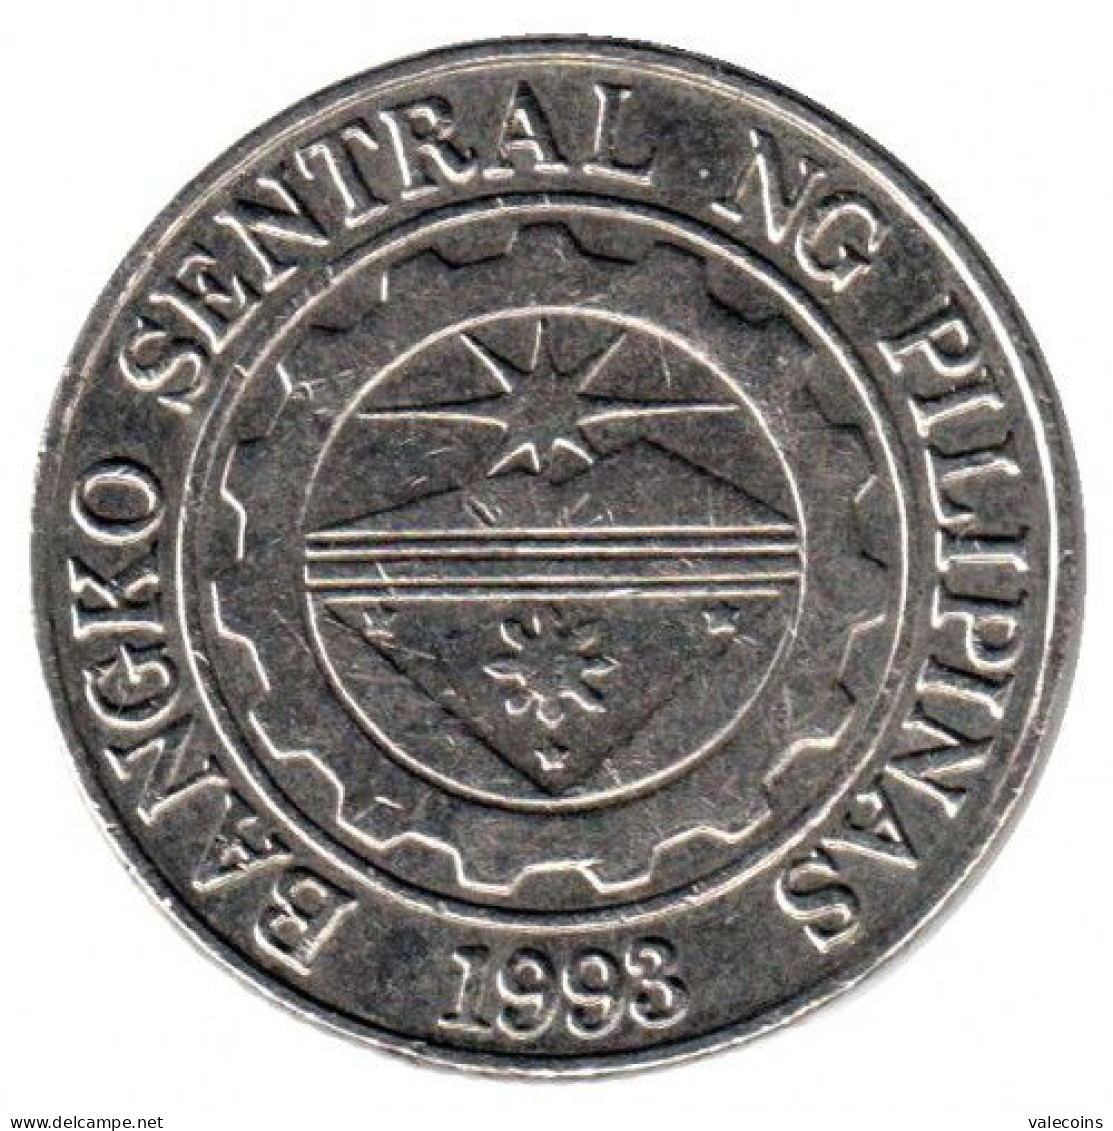 FILIPPINE PILIPINAS PHILIPPINES - 1997 - 1 Piso - KM 269 - Coin UNC - Filippijnen